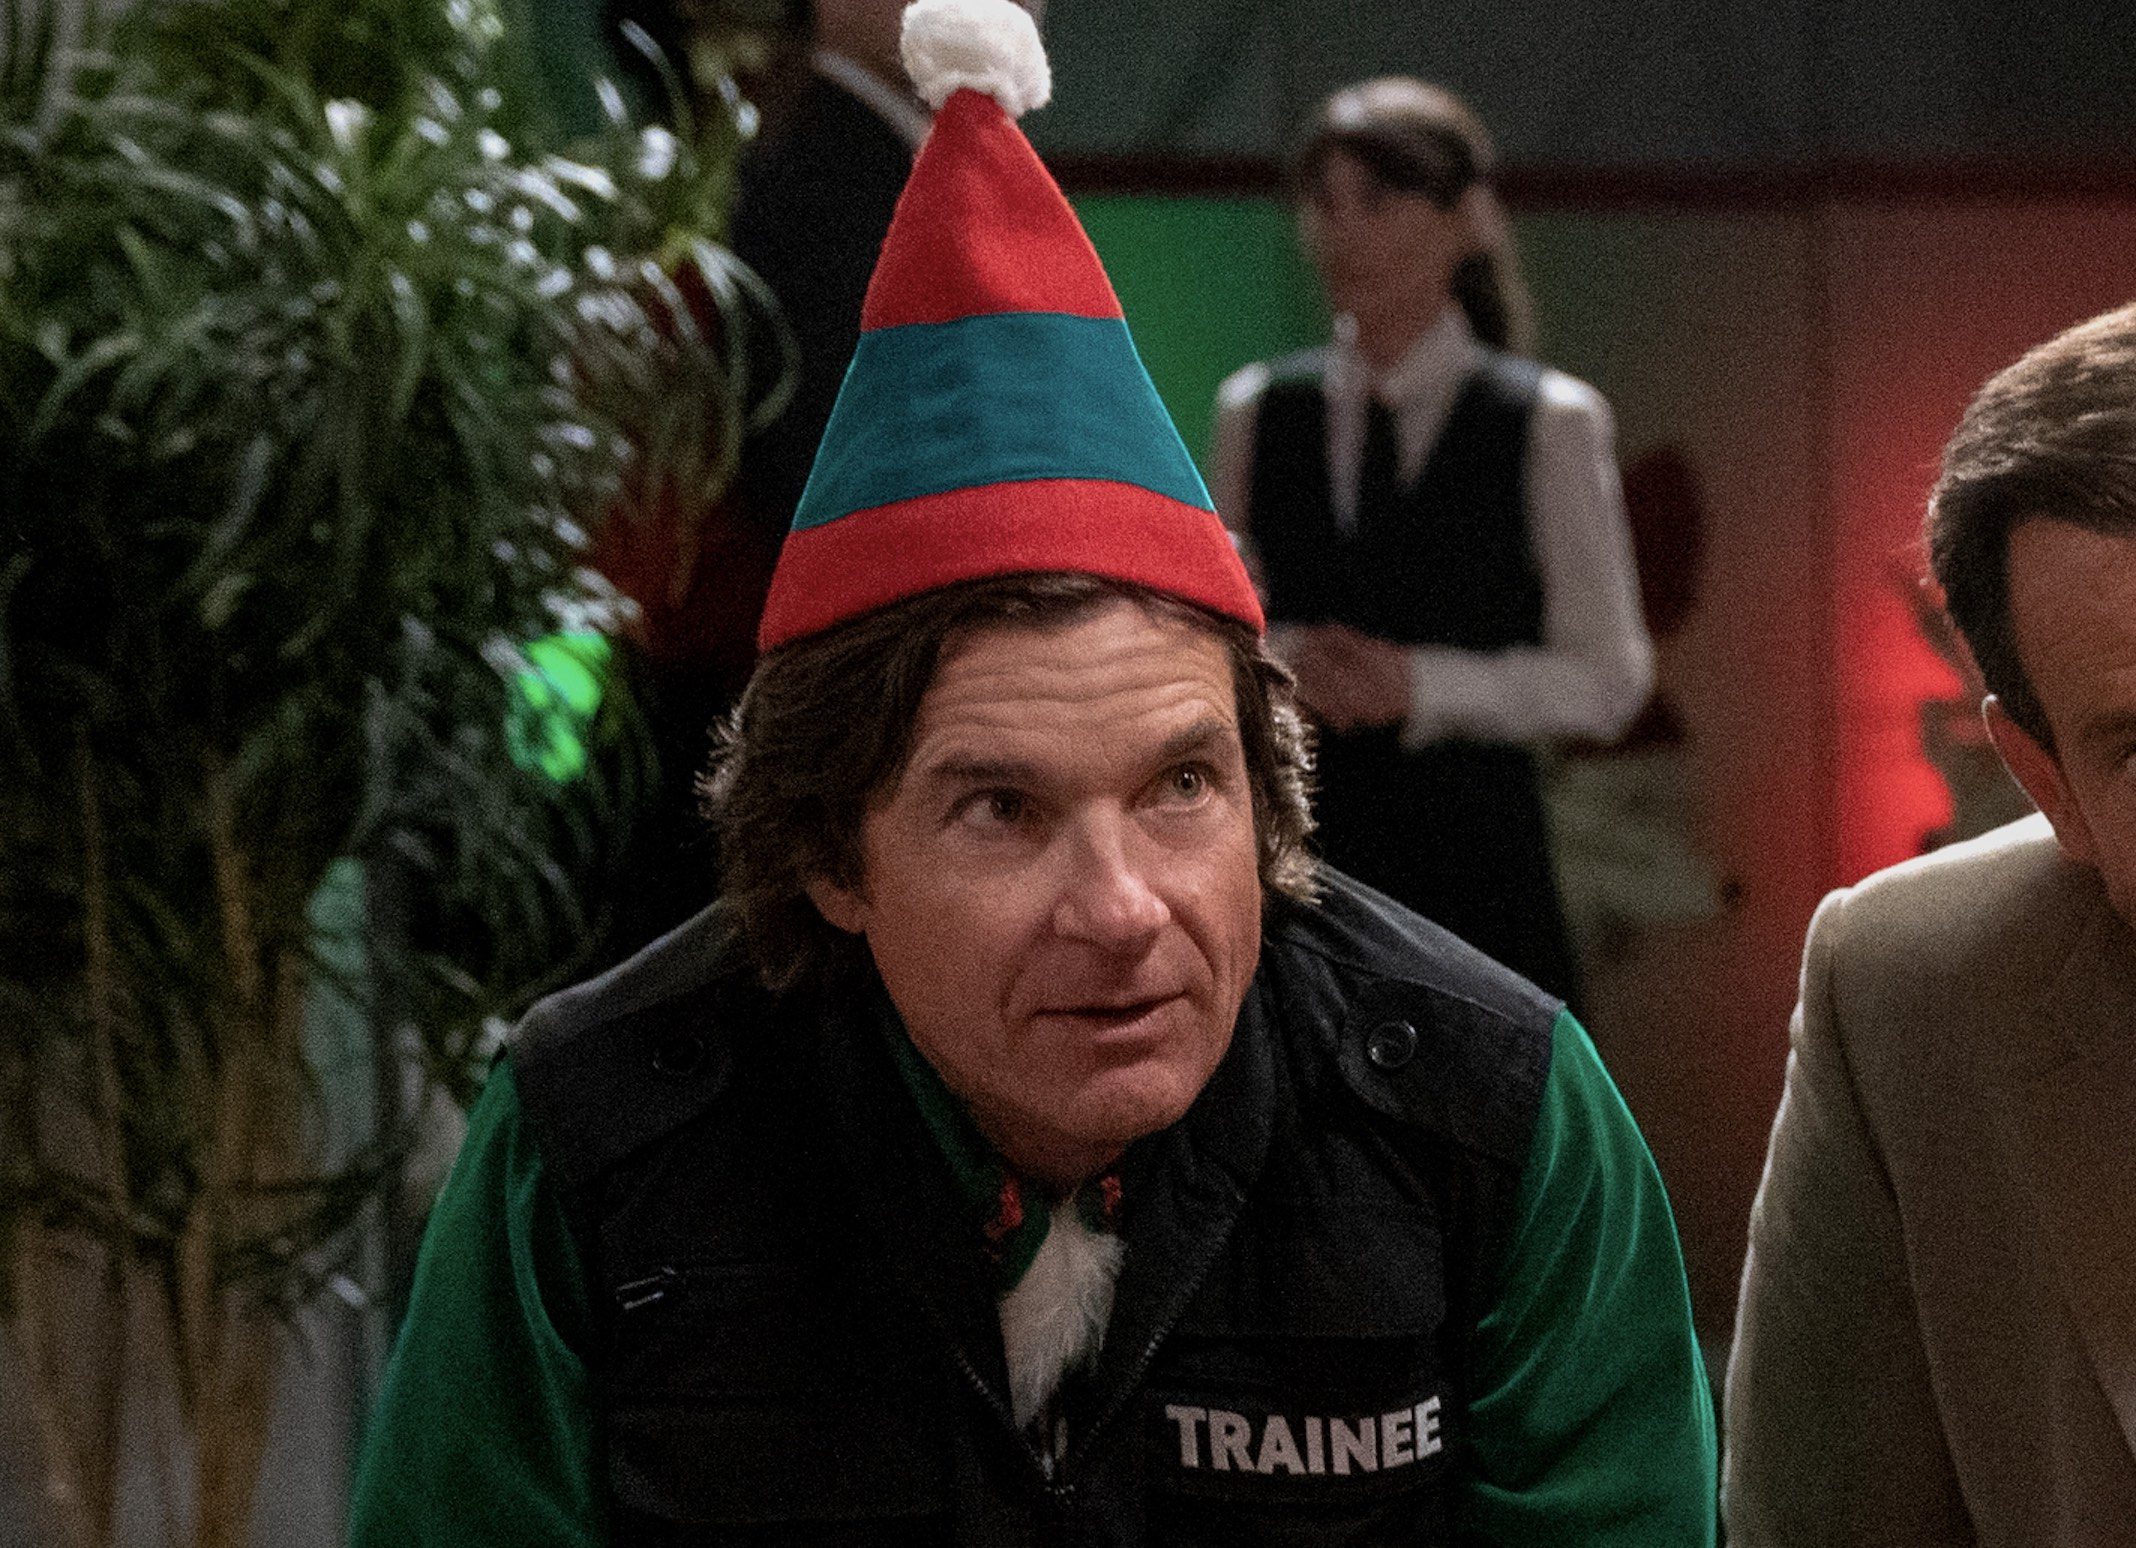 Who Killed Santa Cast on Netflix - Jason Bateman as Himself